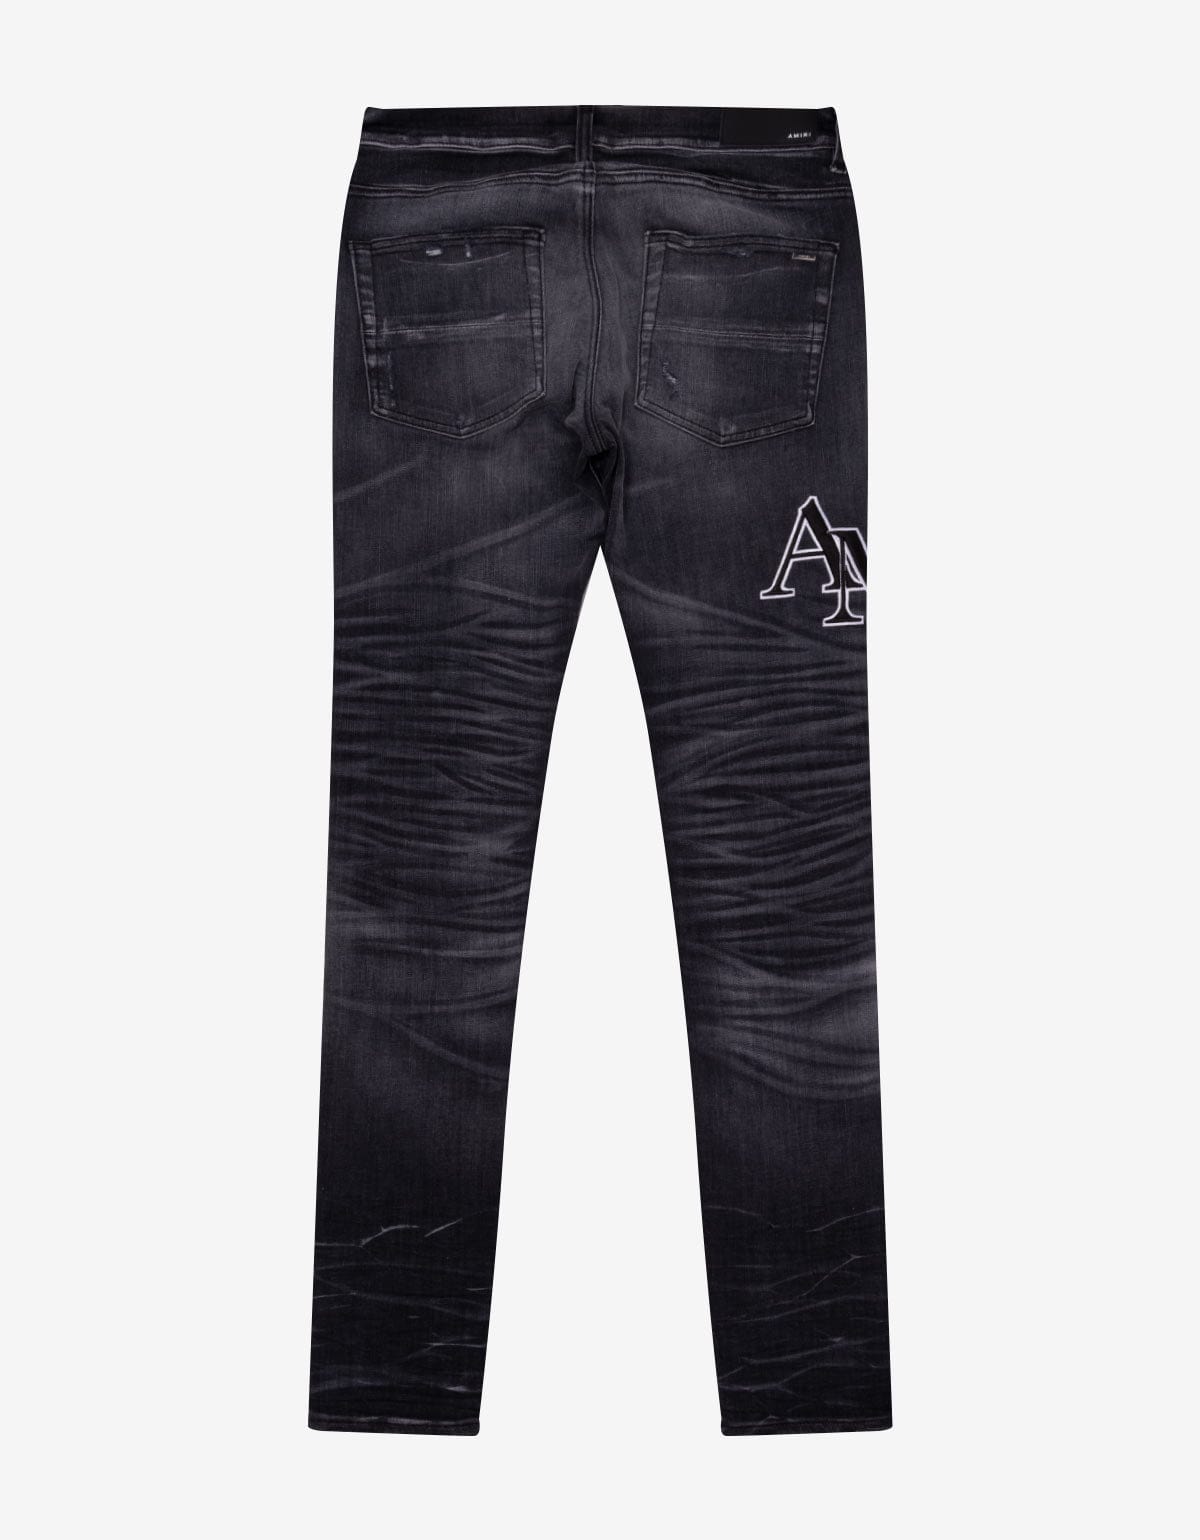 Amiri Amiri Jeans Black Staggered Logo